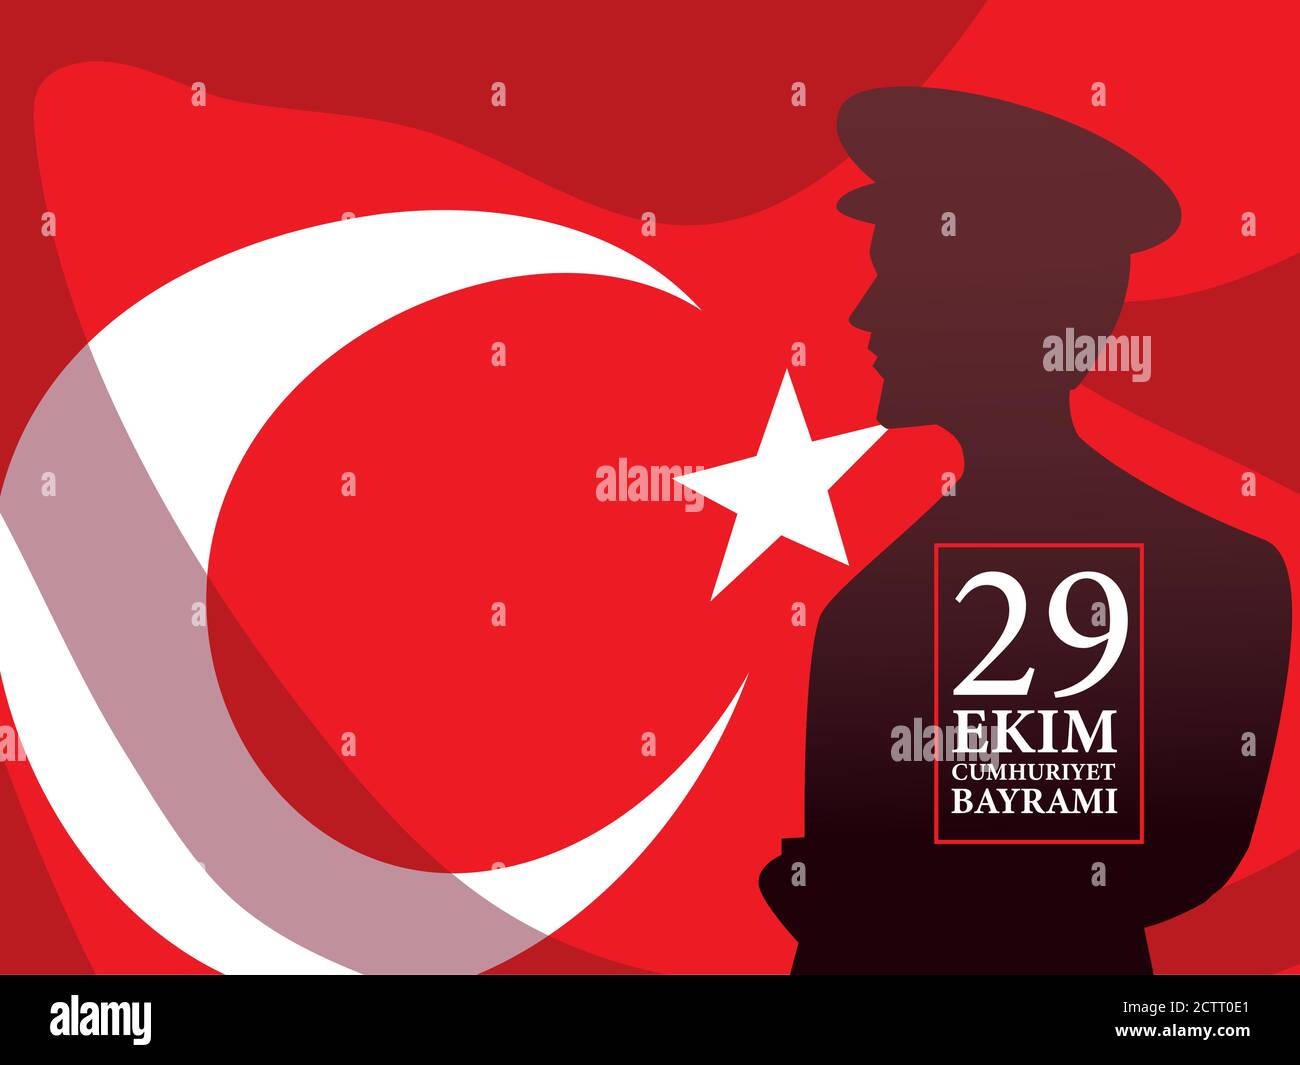 29 ekim cumhuriyet bayrami with turkish flag and ataturk man silhouette design, Turkey and republic theme Vector illustration Stock Vector